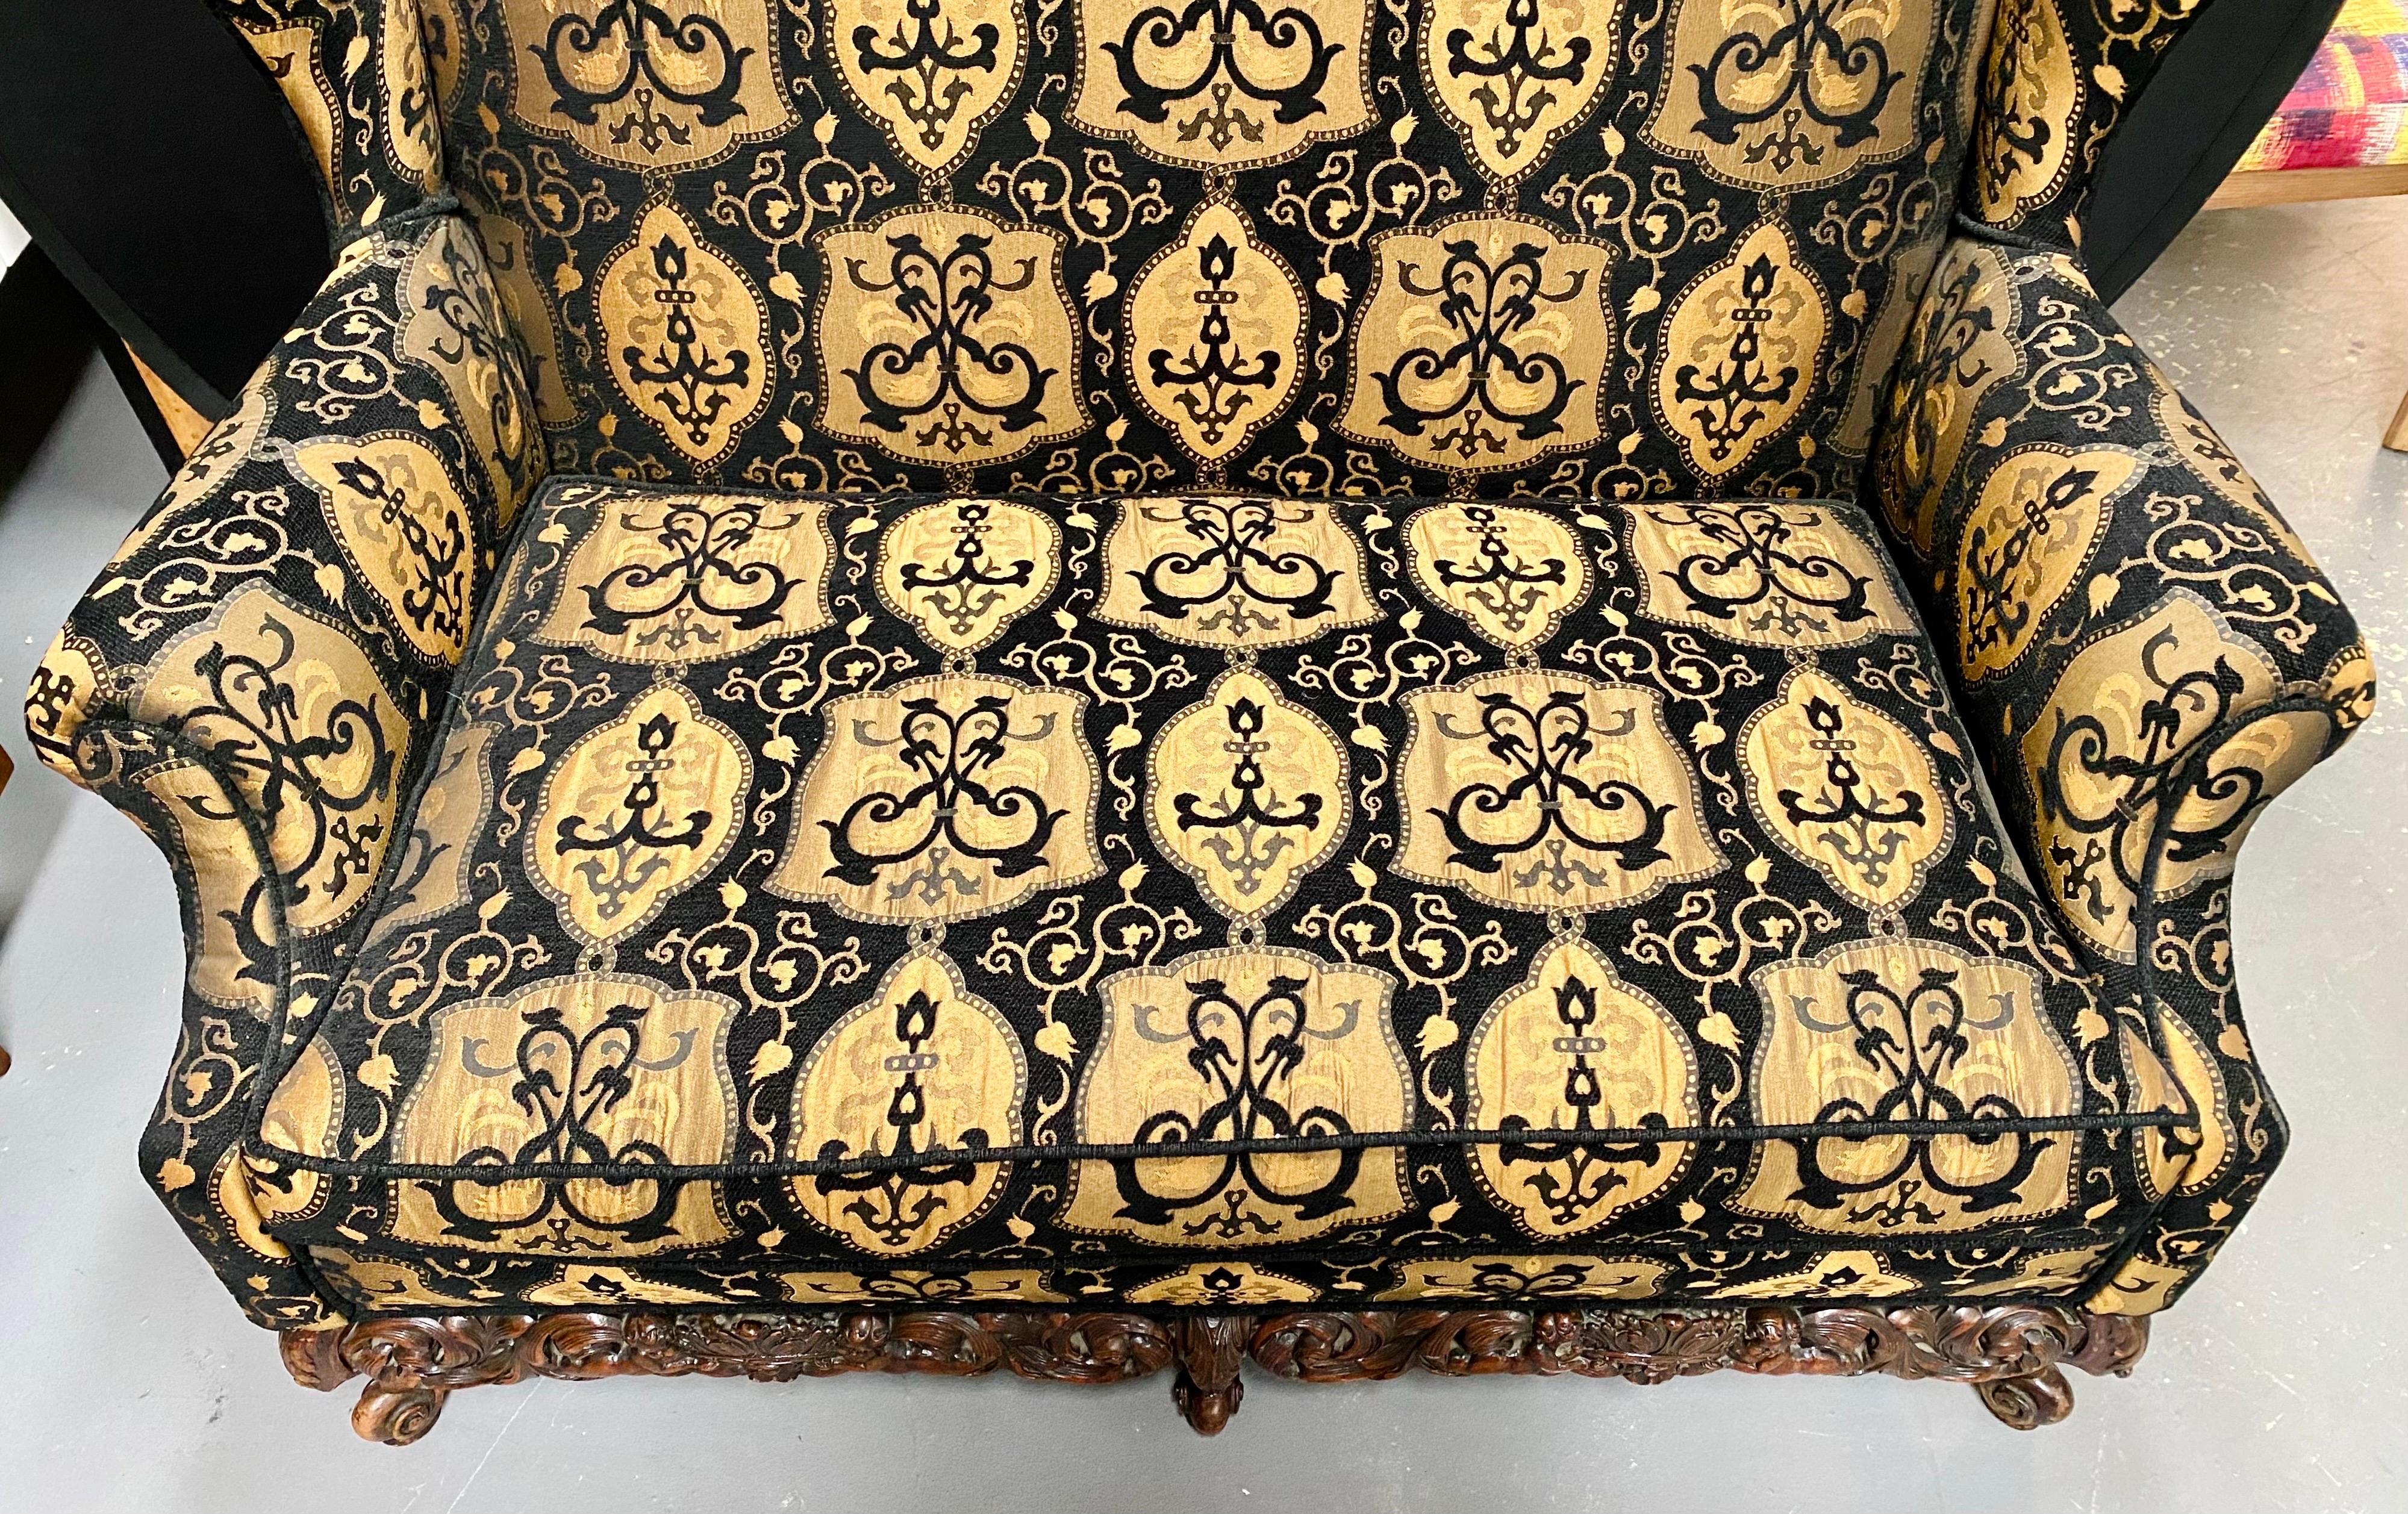 European Italian Rococo Revival Style Settee or Sofa with Heraldic Motif in Black & Beige For Sale